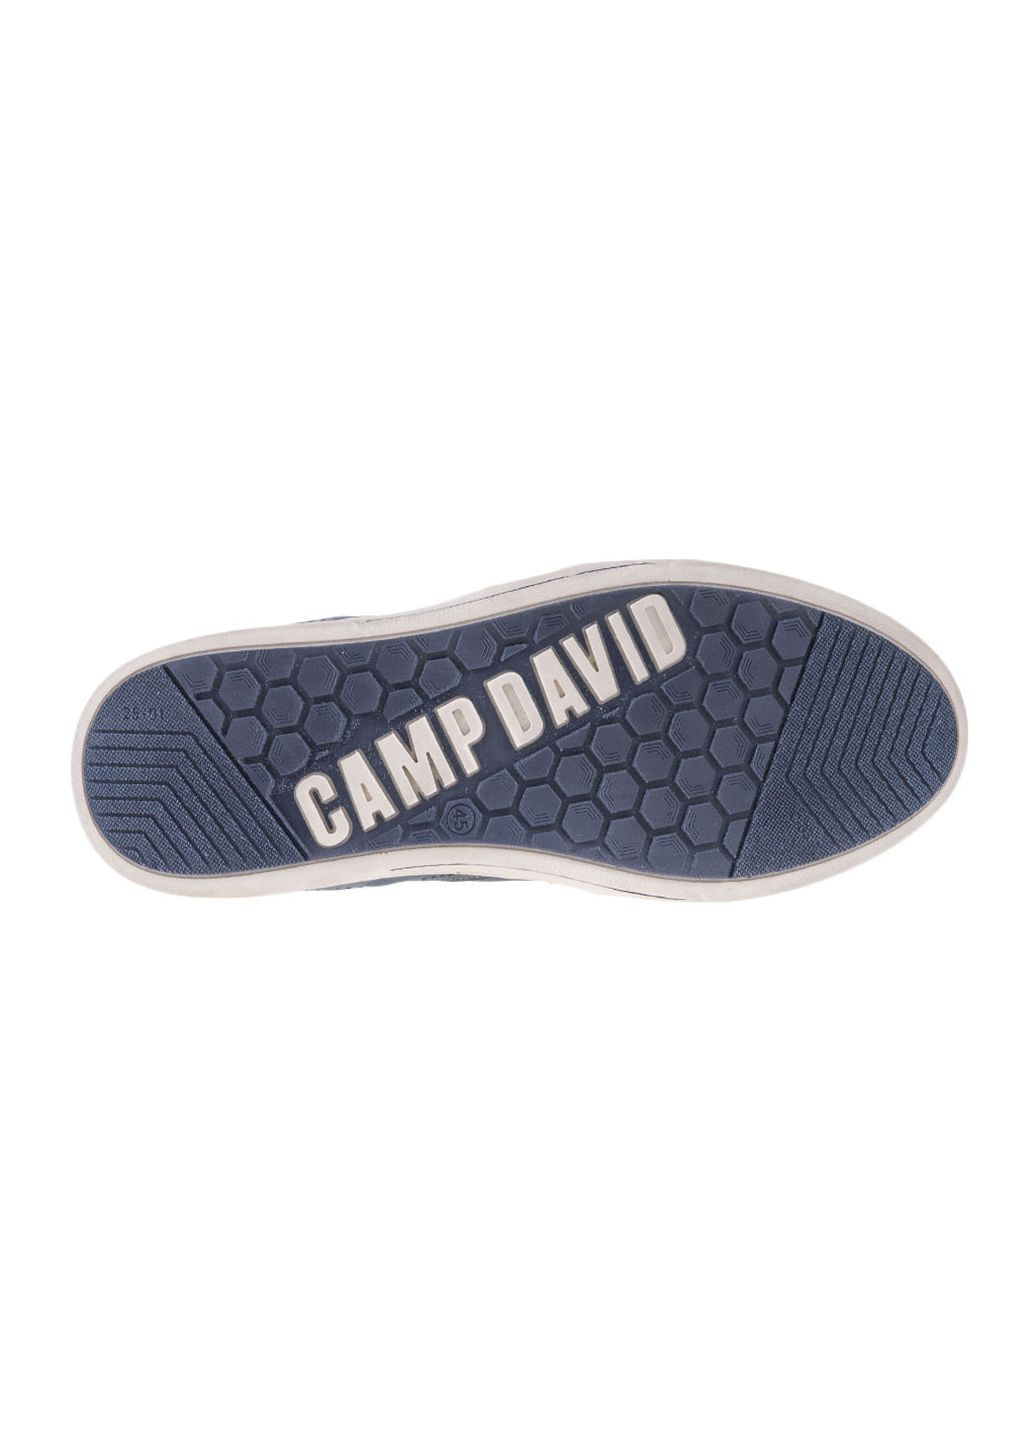 Голубые кеды Camp David